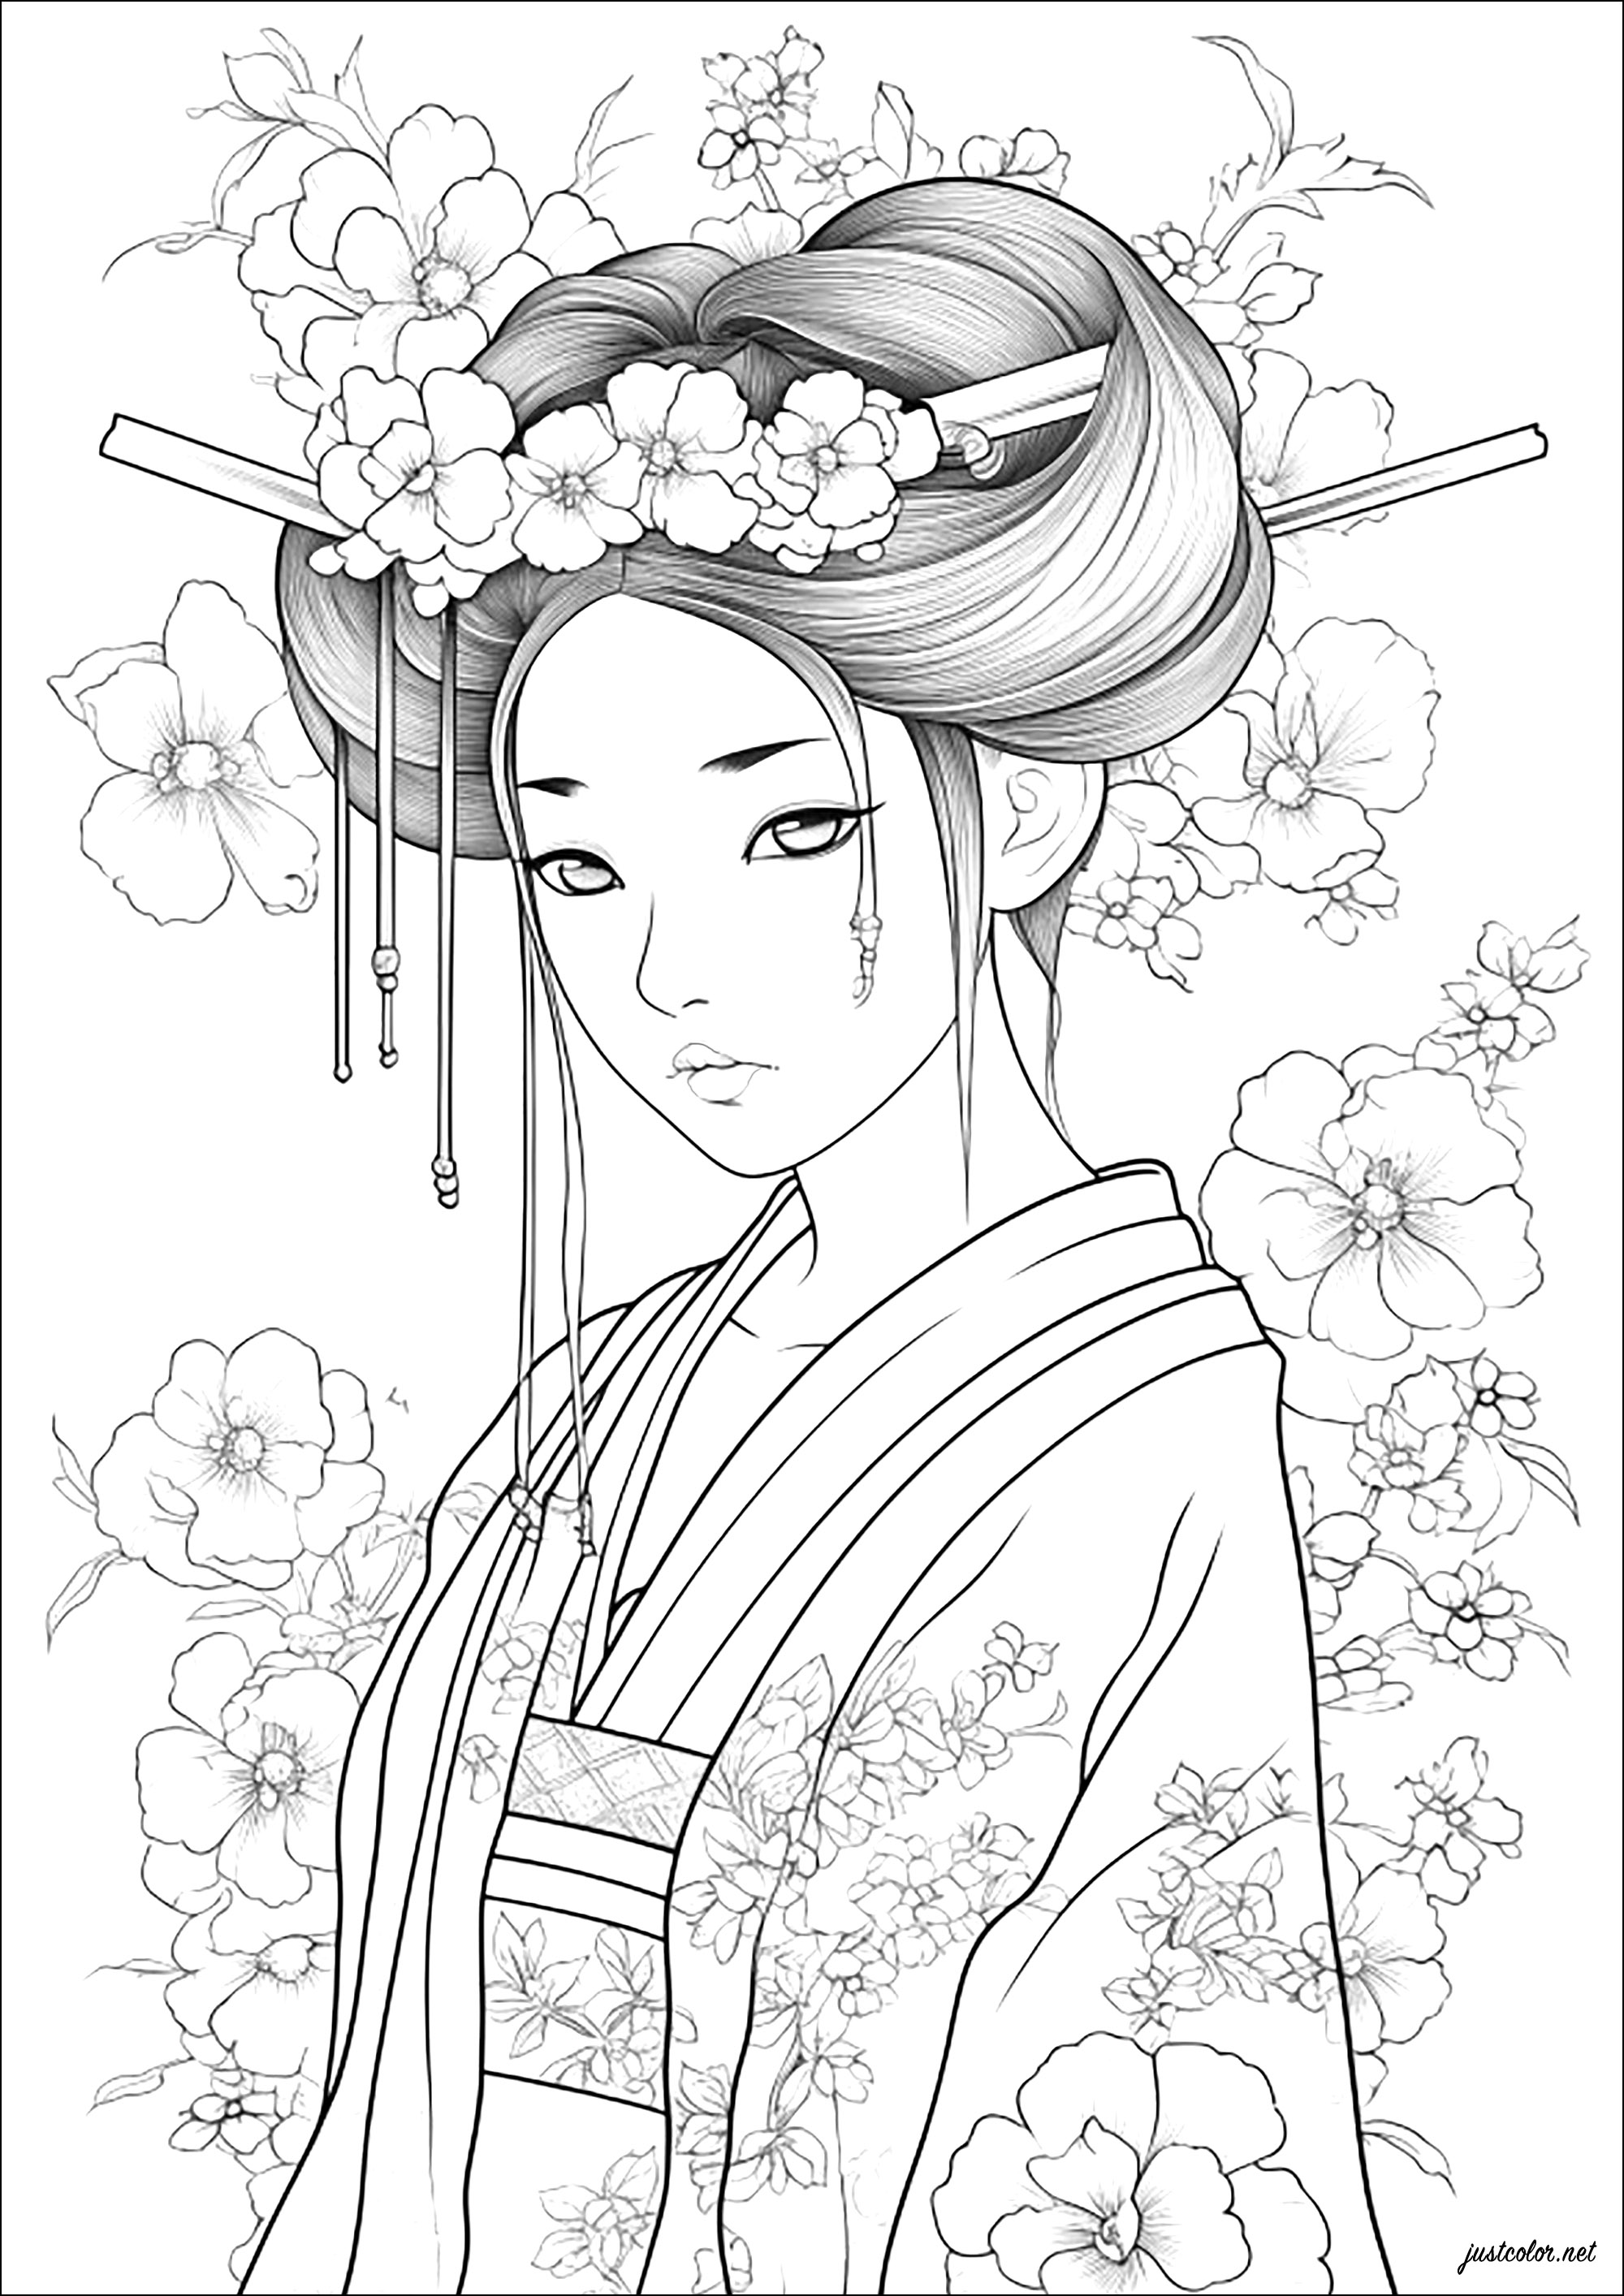 Geisha and flowers - 1